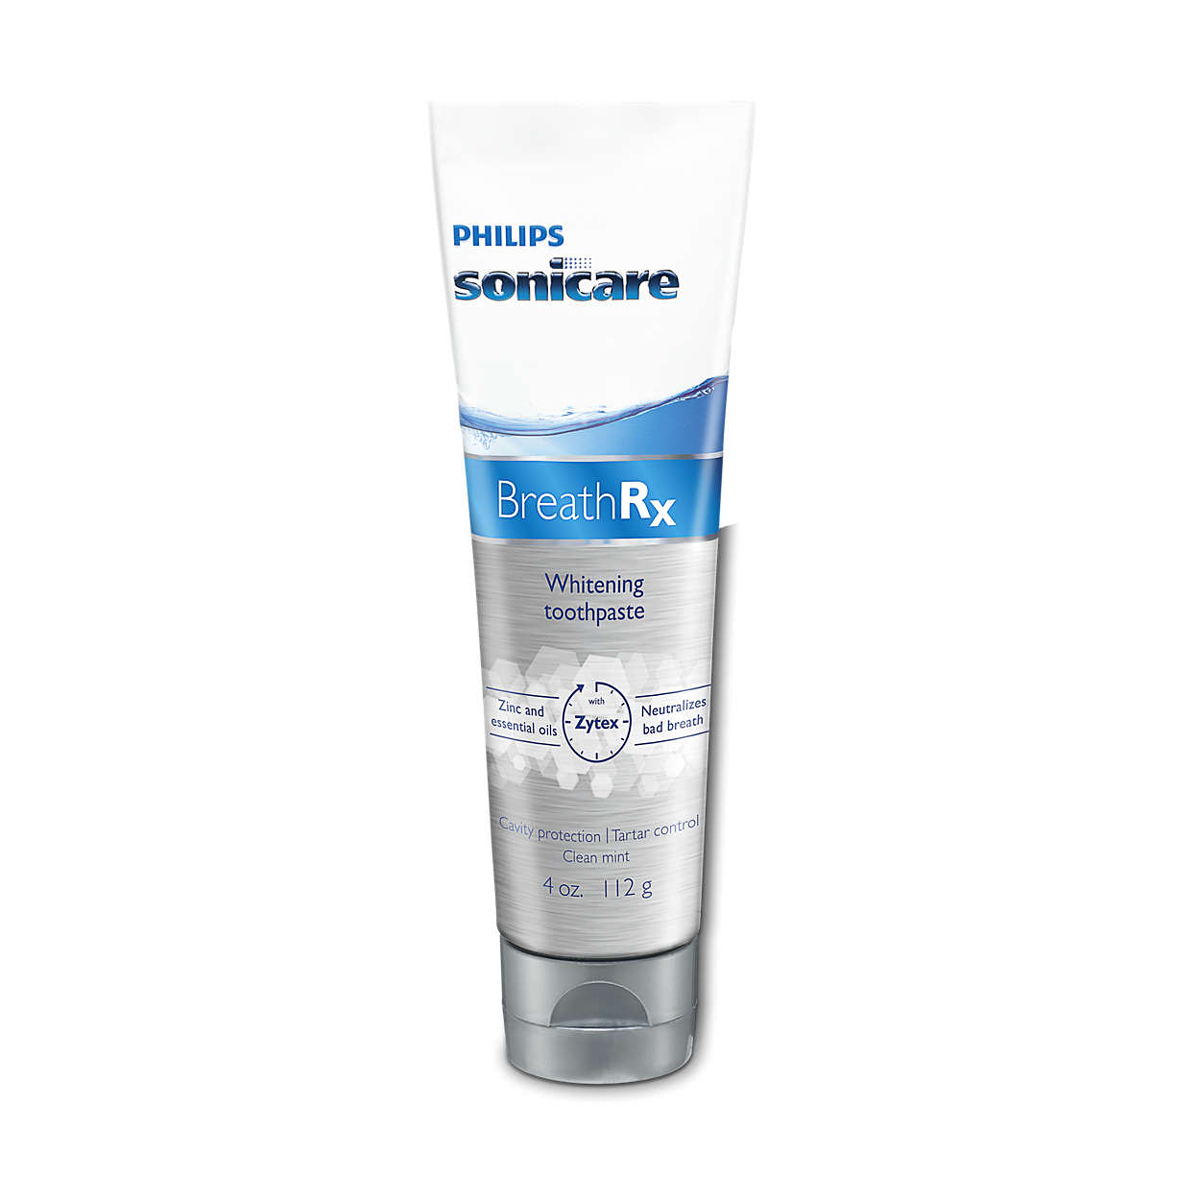 Philips Sonicare BreathRx Toothpaste- Enhanced Whitening Formula (4oz tube)